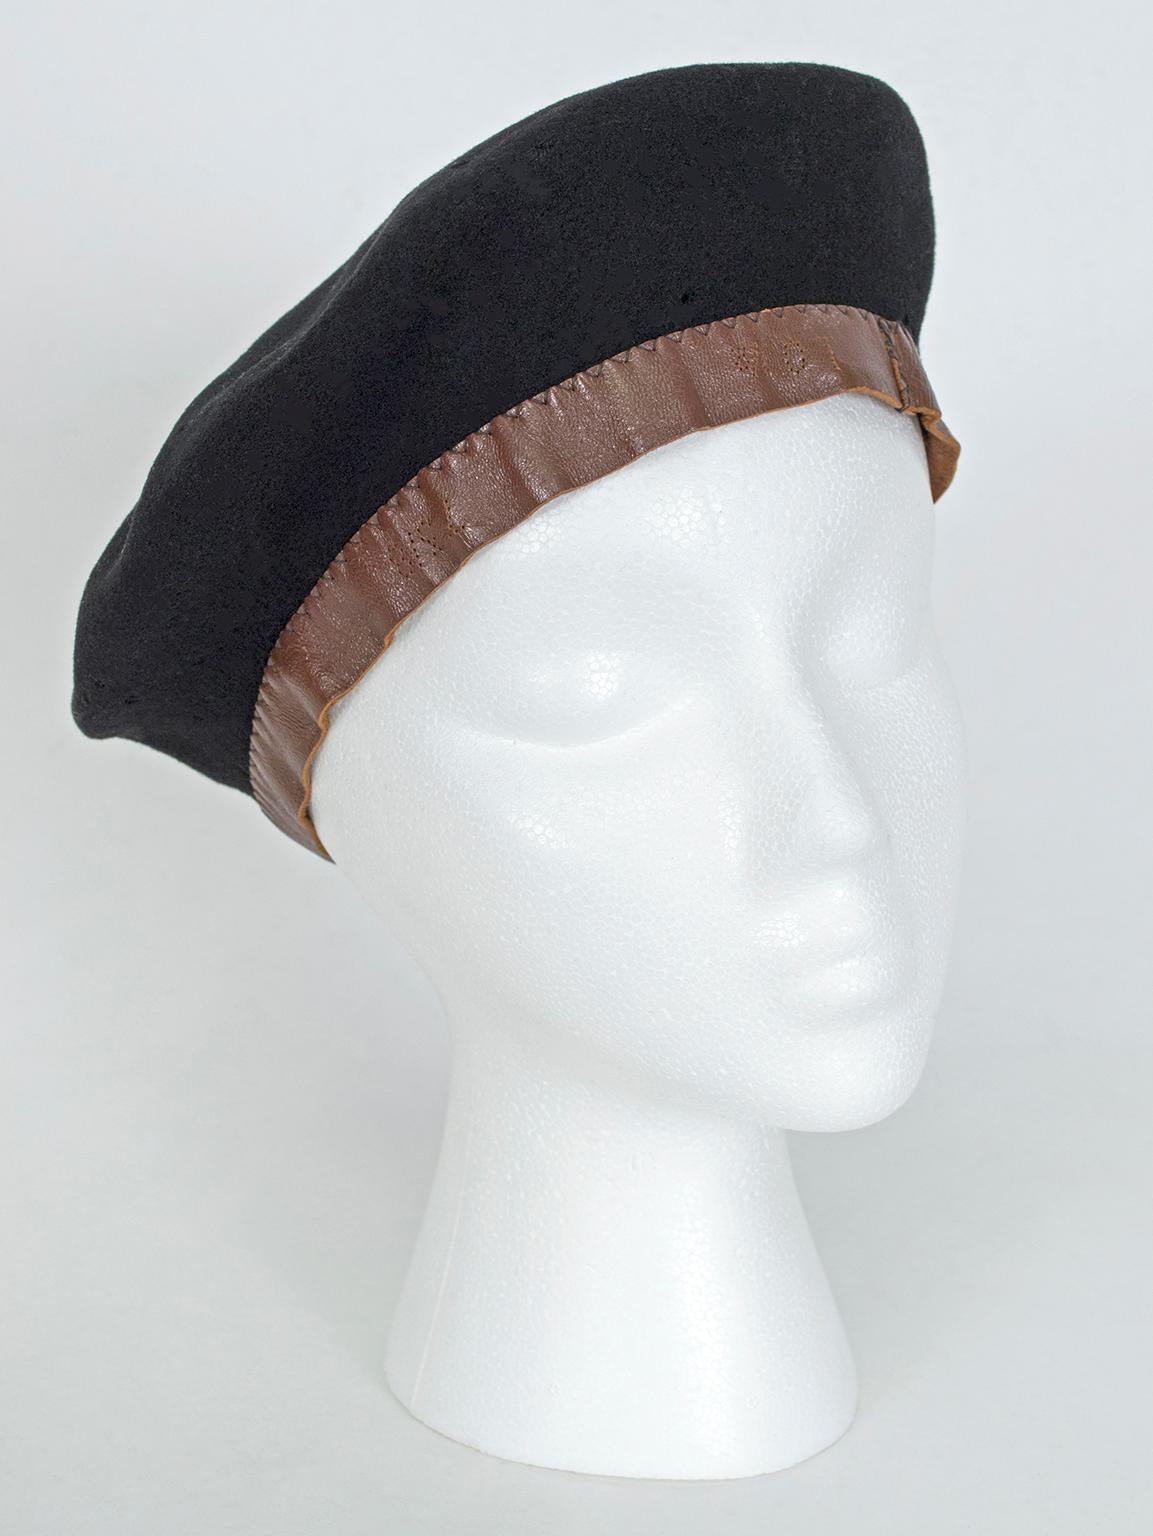 basque beret history